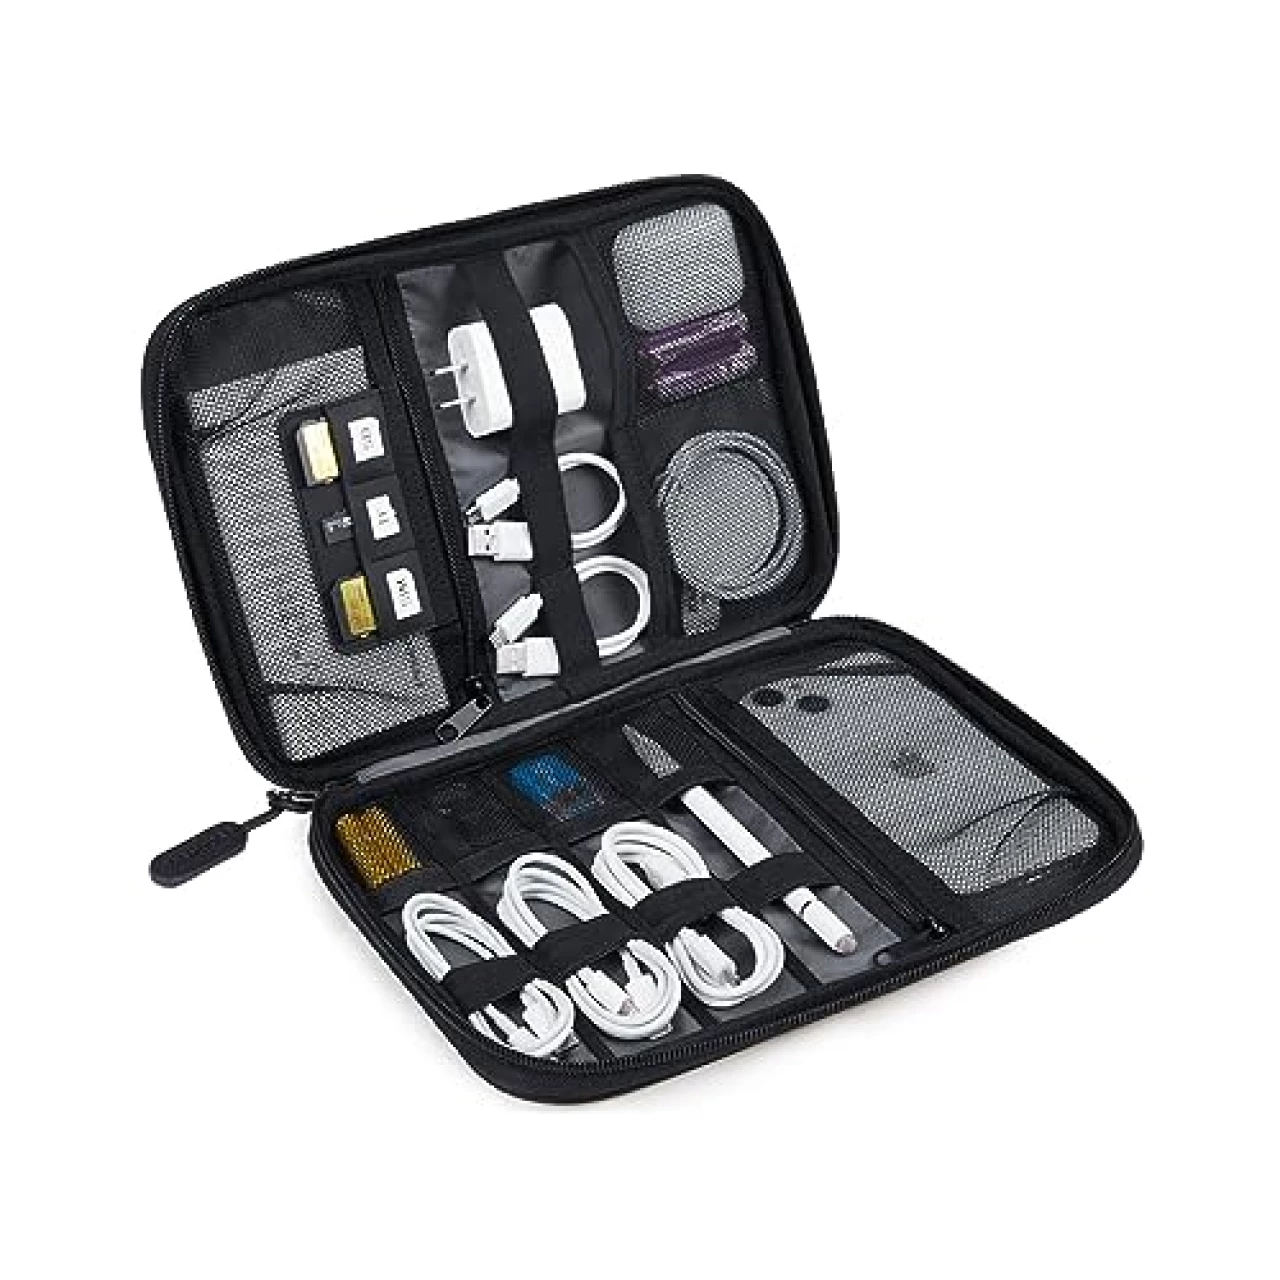 BAGSMART Electronics Organizer Travel Case, Small Cable Organizer Bag